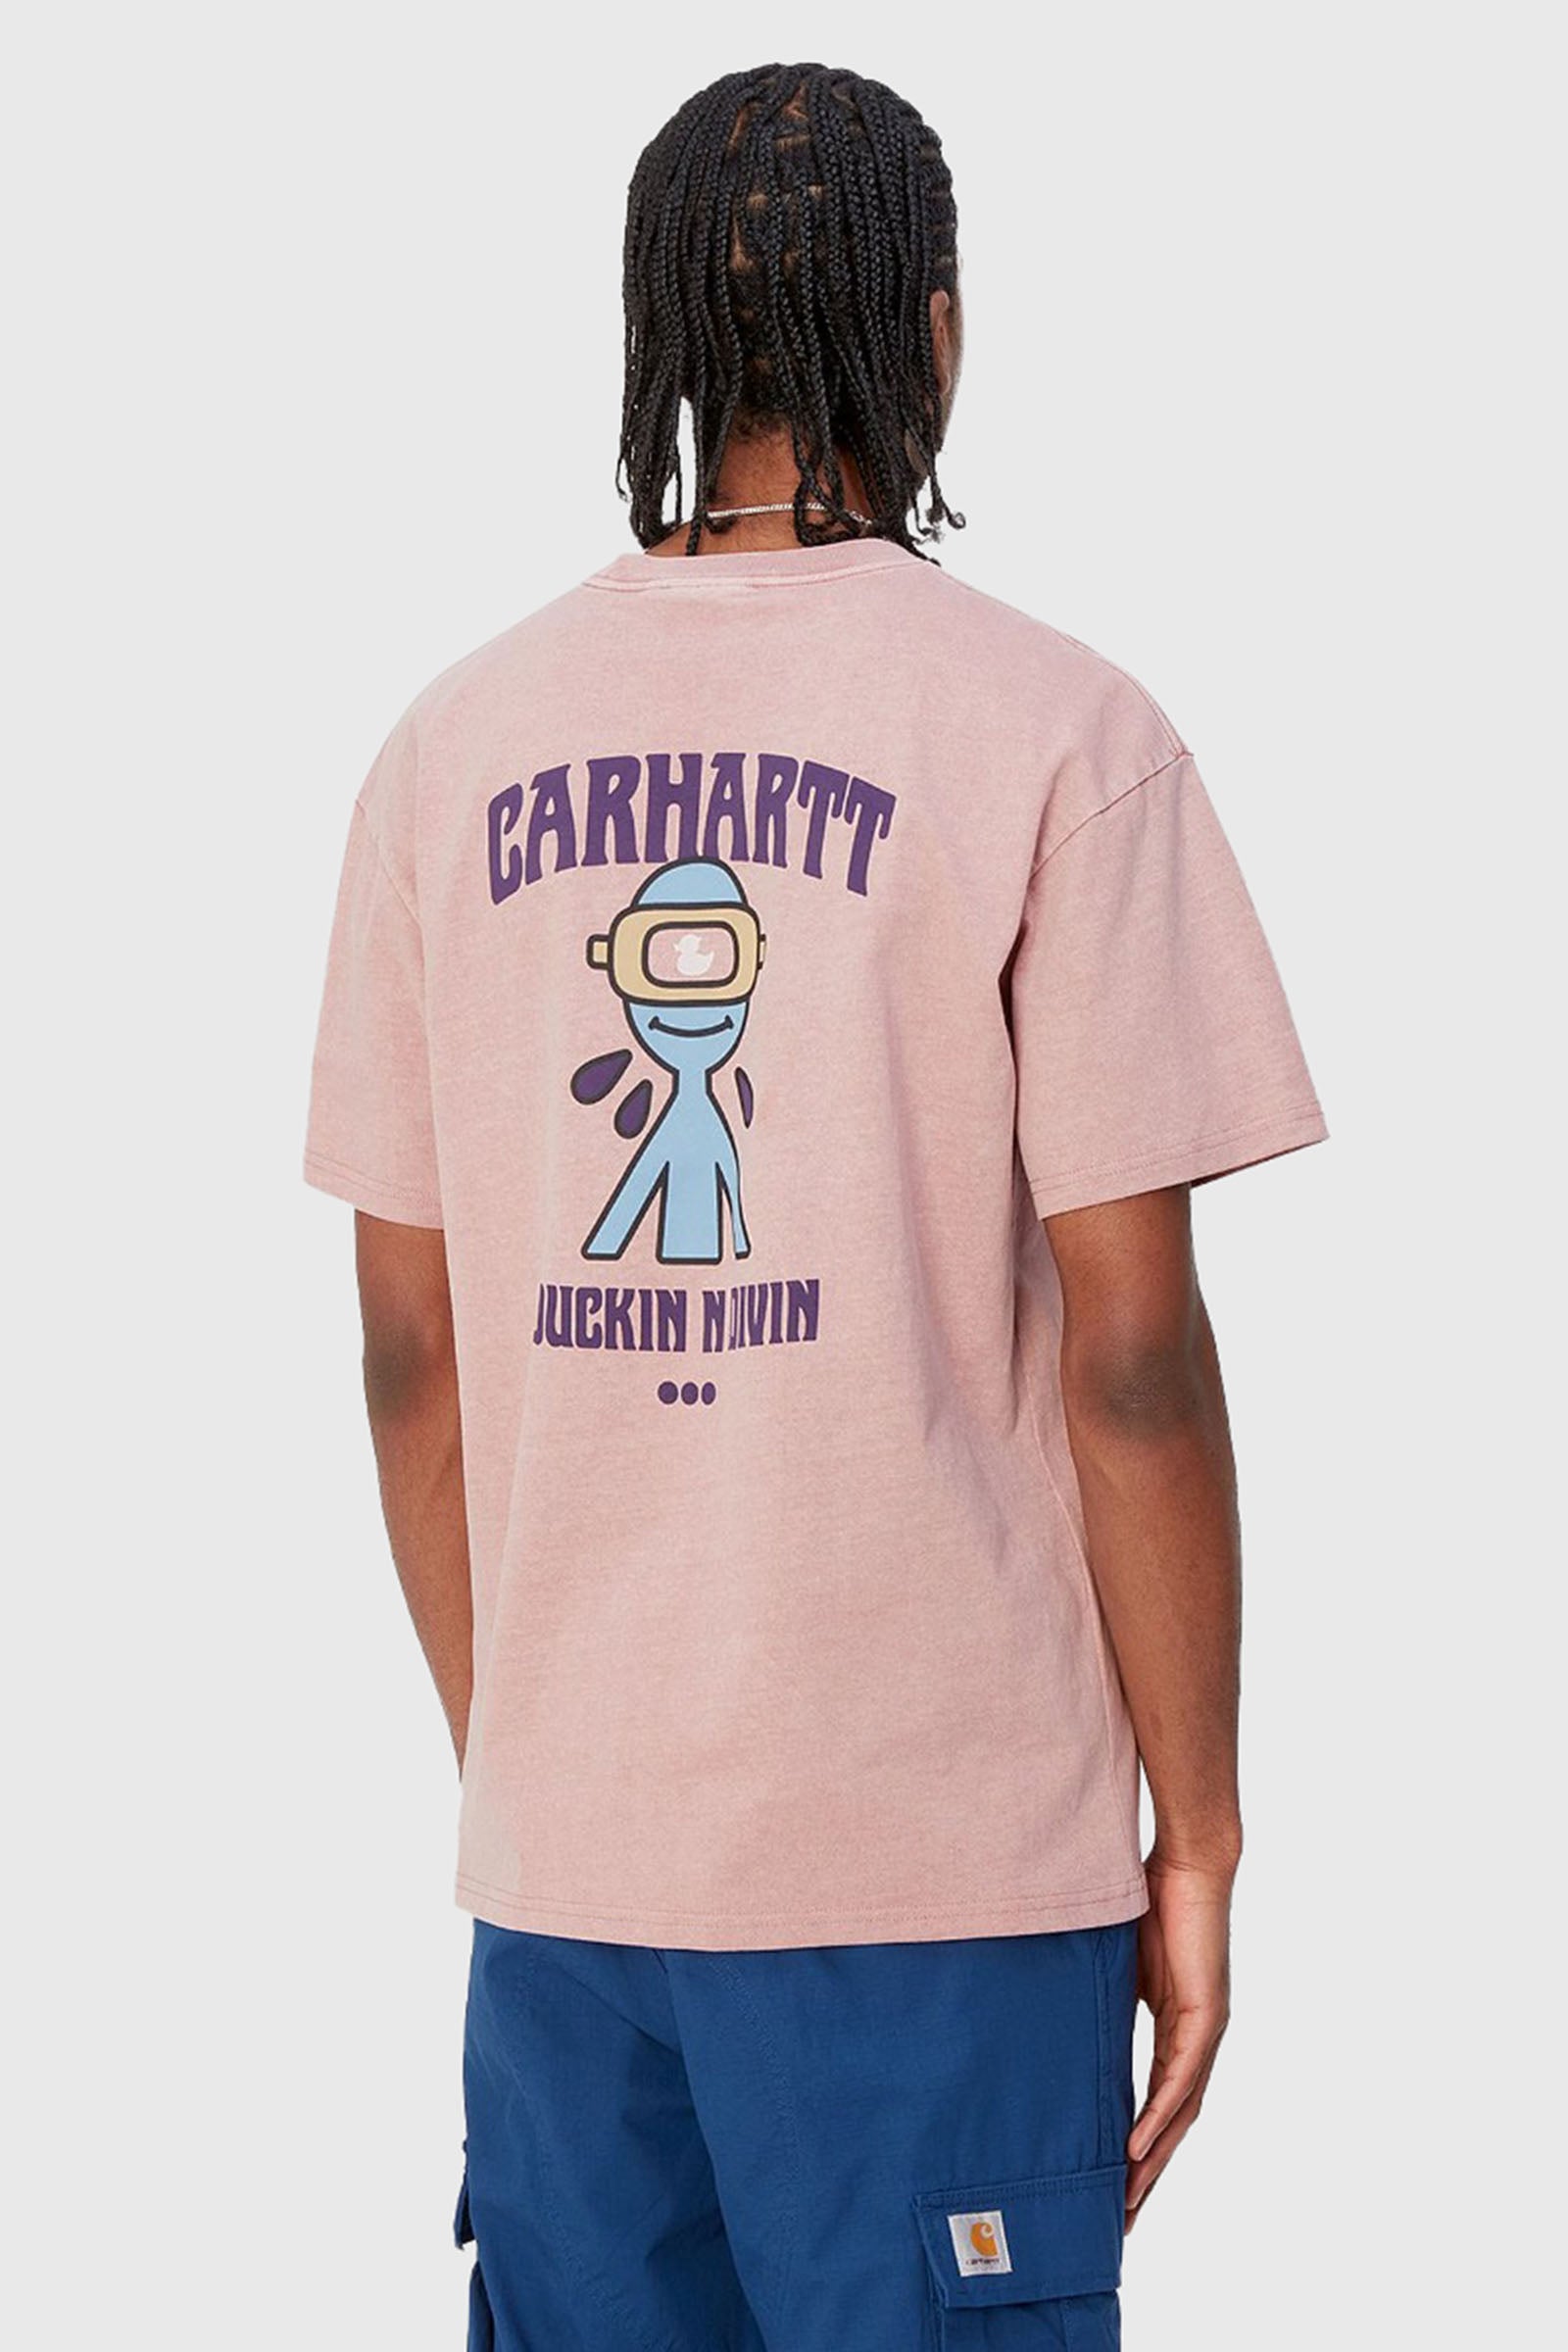 Carhartt Wip T-shirt Short Sleeve Duckin' Rosa Antico Uomo - 2